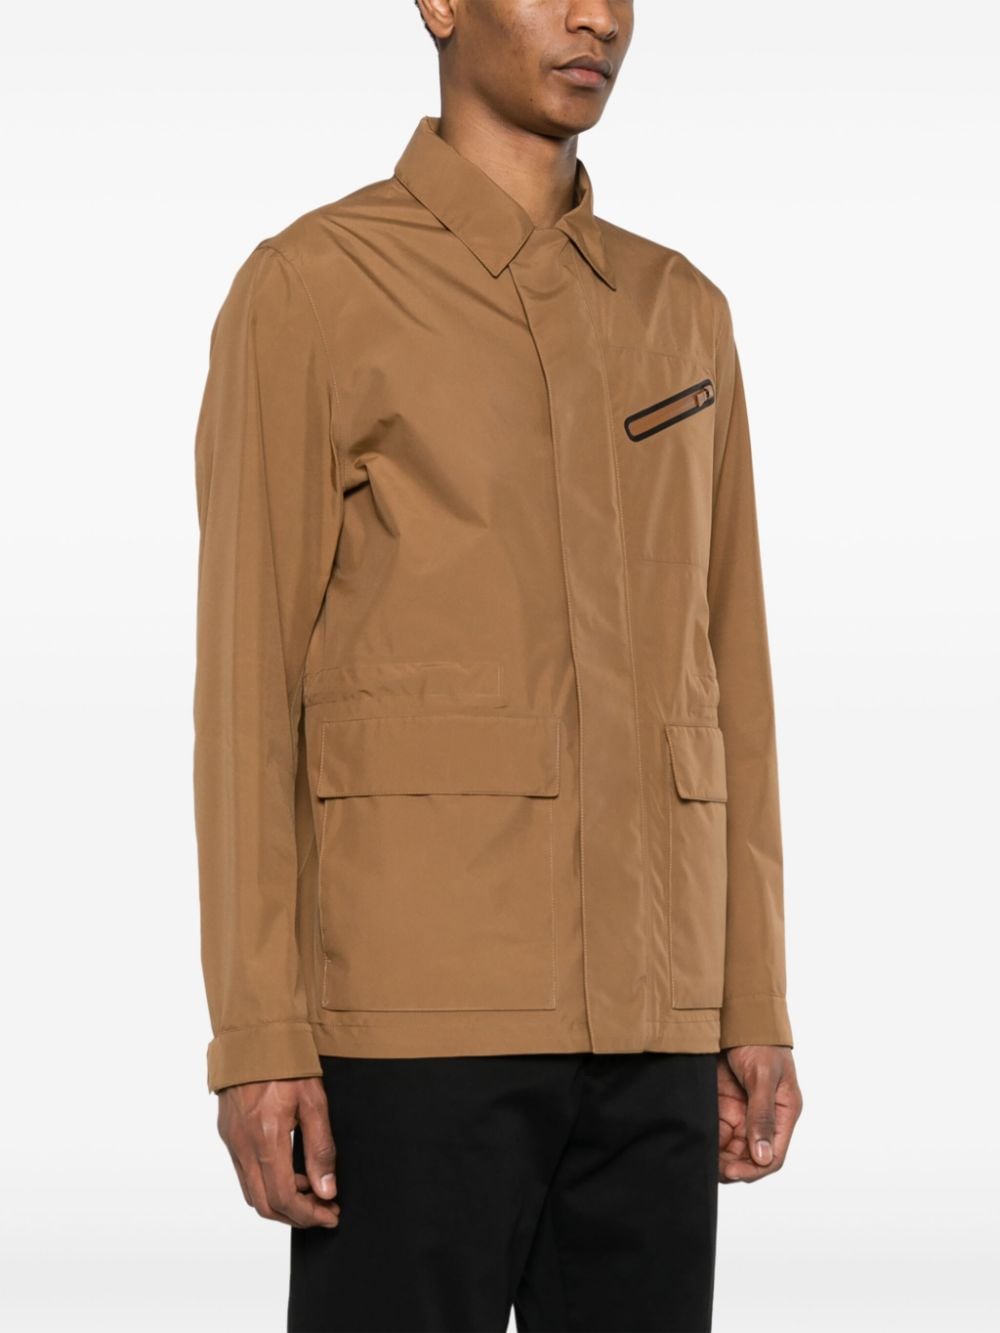 Brown zip-up lightweight jacket<BR/><BR/><BR/>